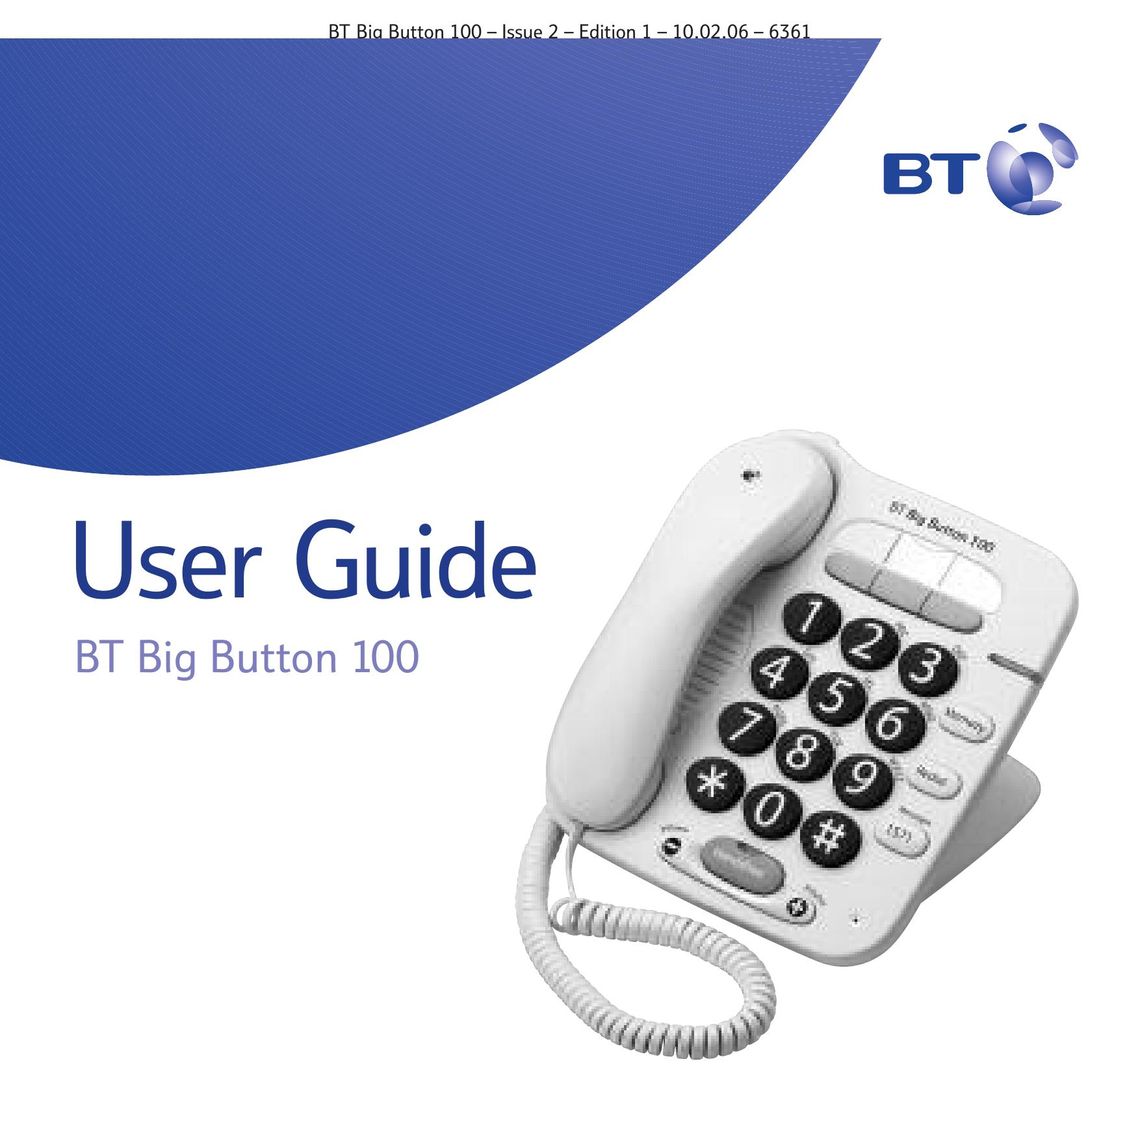 BT Big Button 100 Telephone User Manual